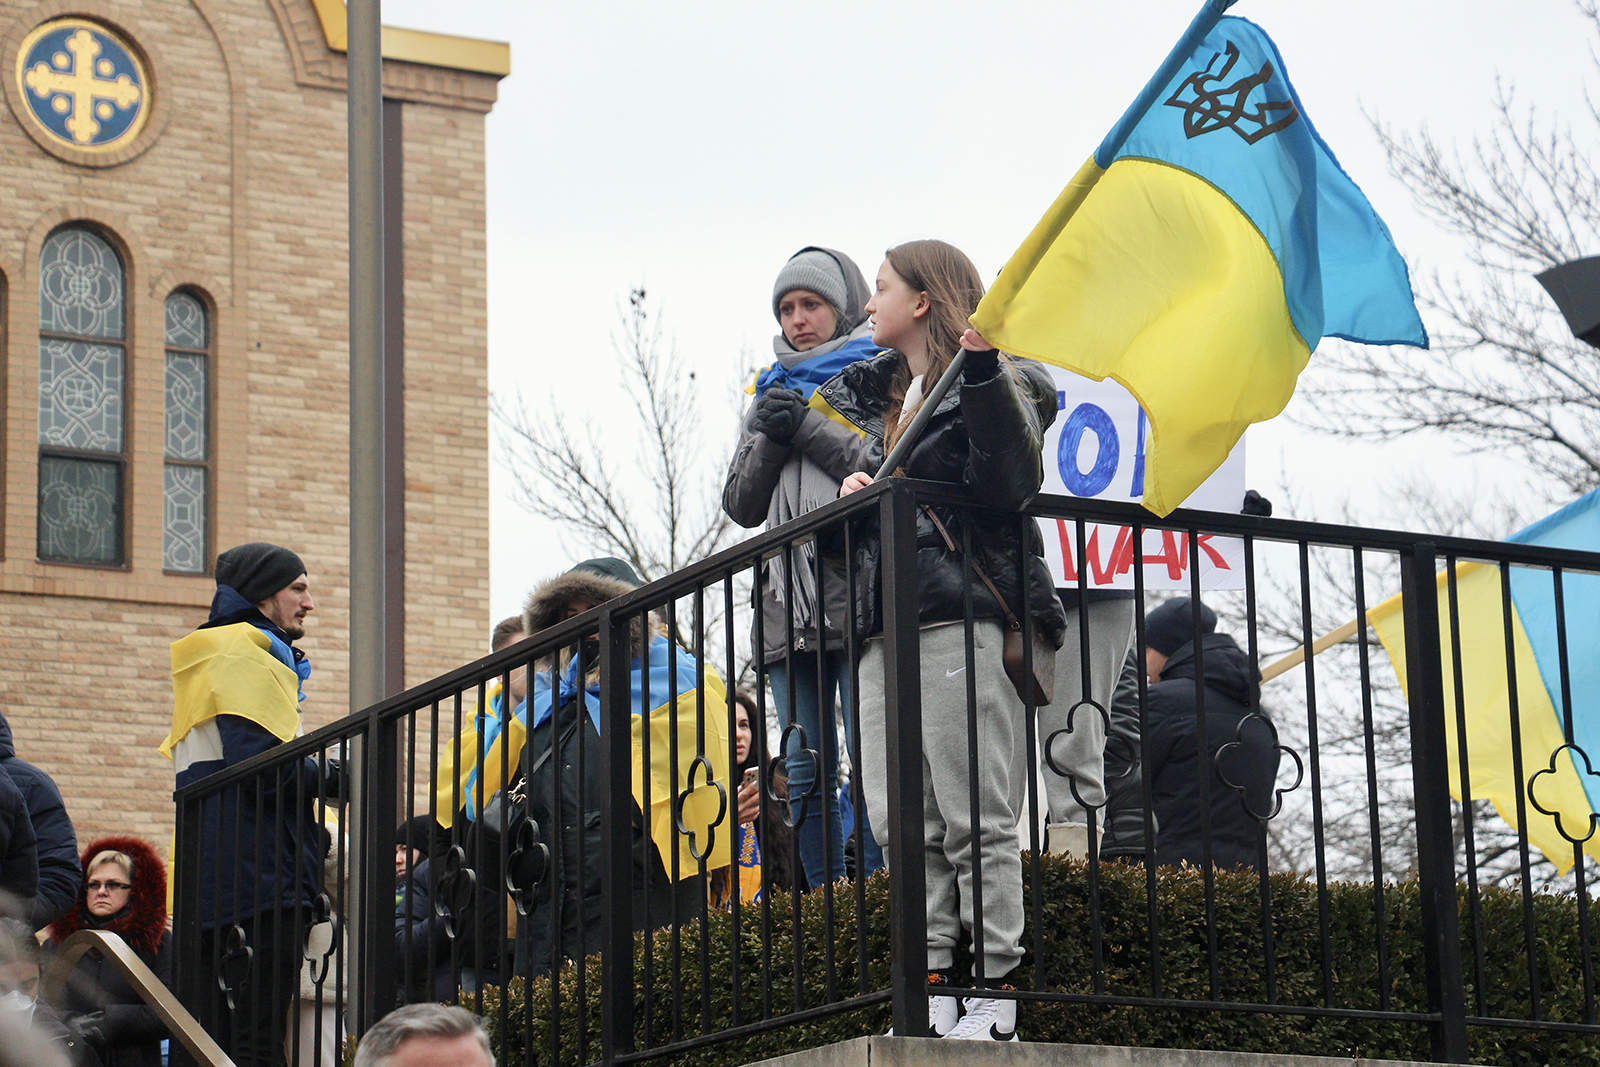 Pro-Ukraine demonstrators rally outside the Sts. Volodymyr and Olha Ukrainian Catholic Church in Chicago's Ukrainian Village neighborhood, Thursday, Feb. 24, 2022. RNS photo by Emily McFarlan Miller